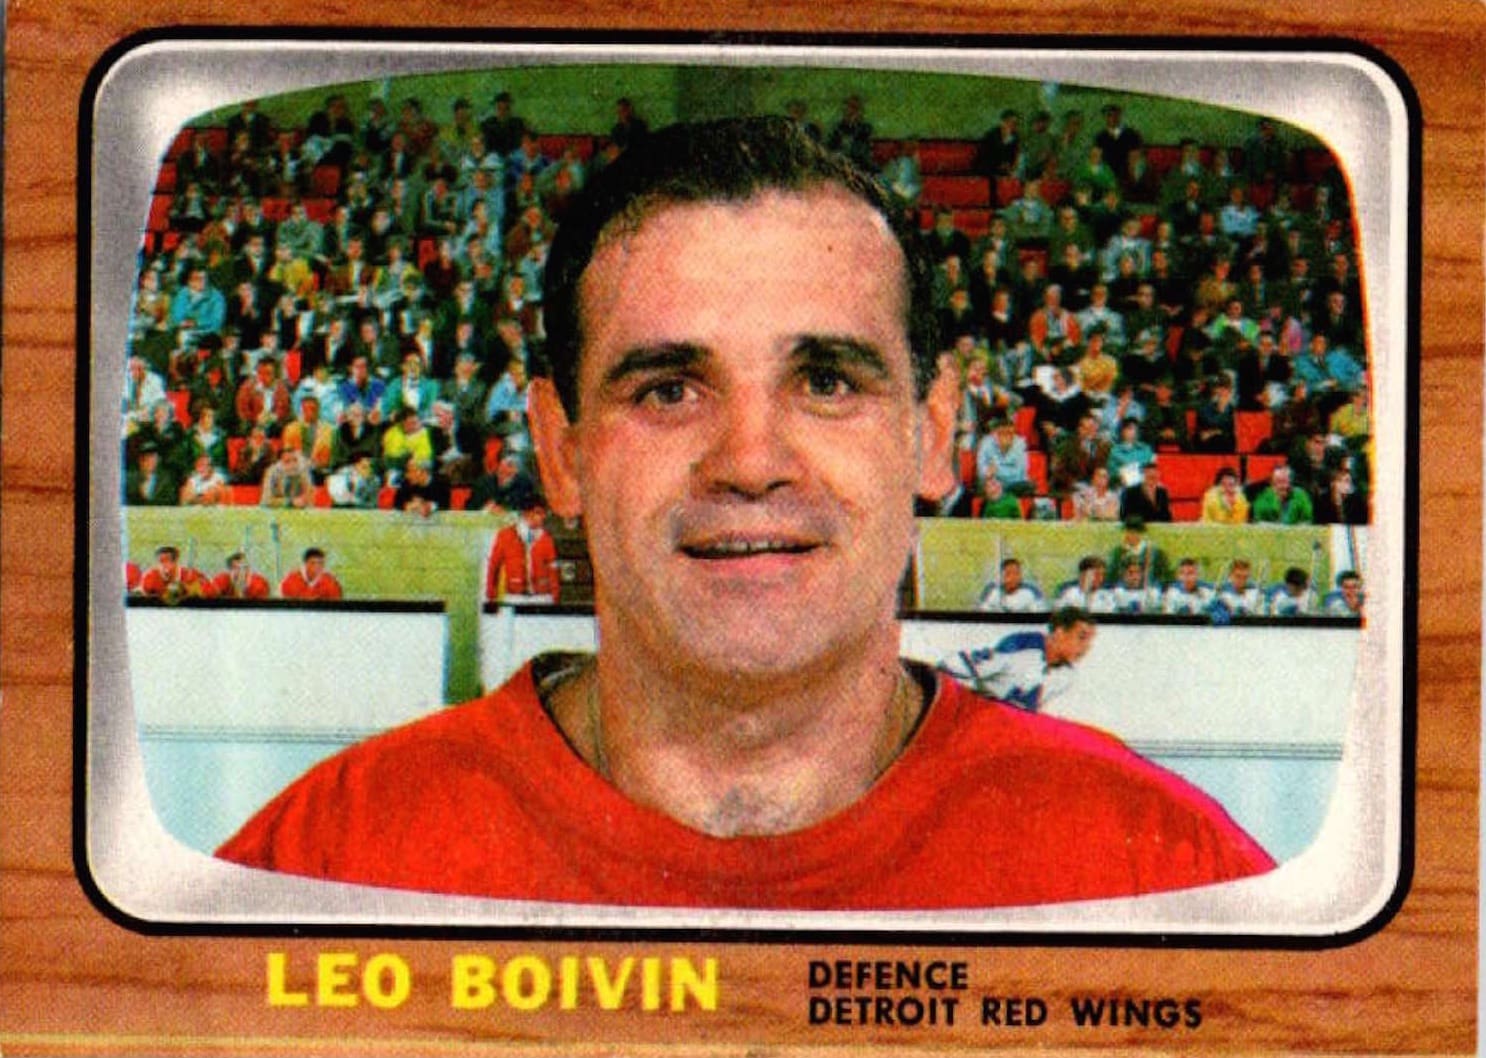 Leo Boivin, former Detroit Red Wings defenseman